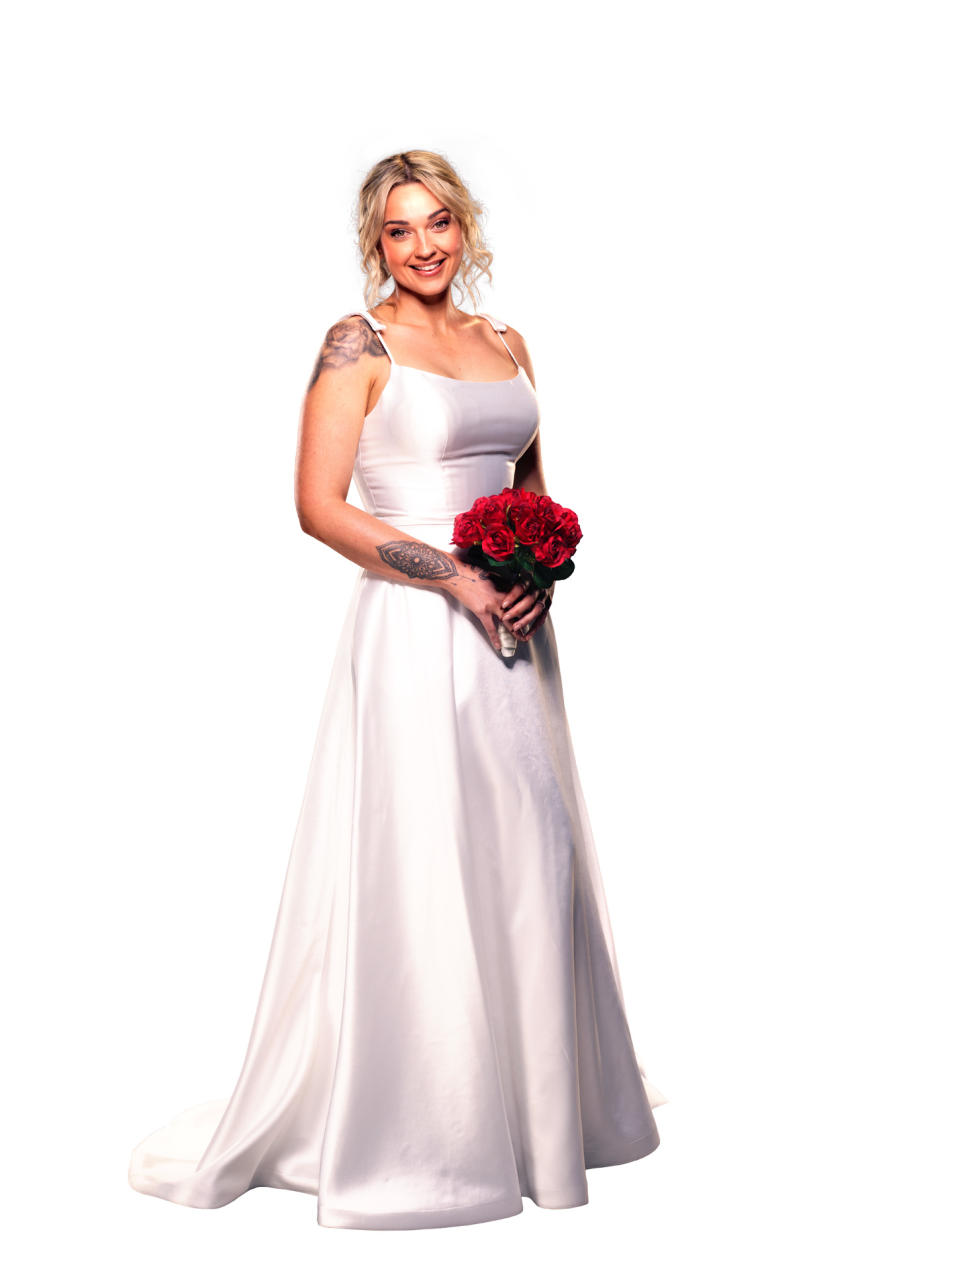 MAFS 2024 bride Tori Adams.